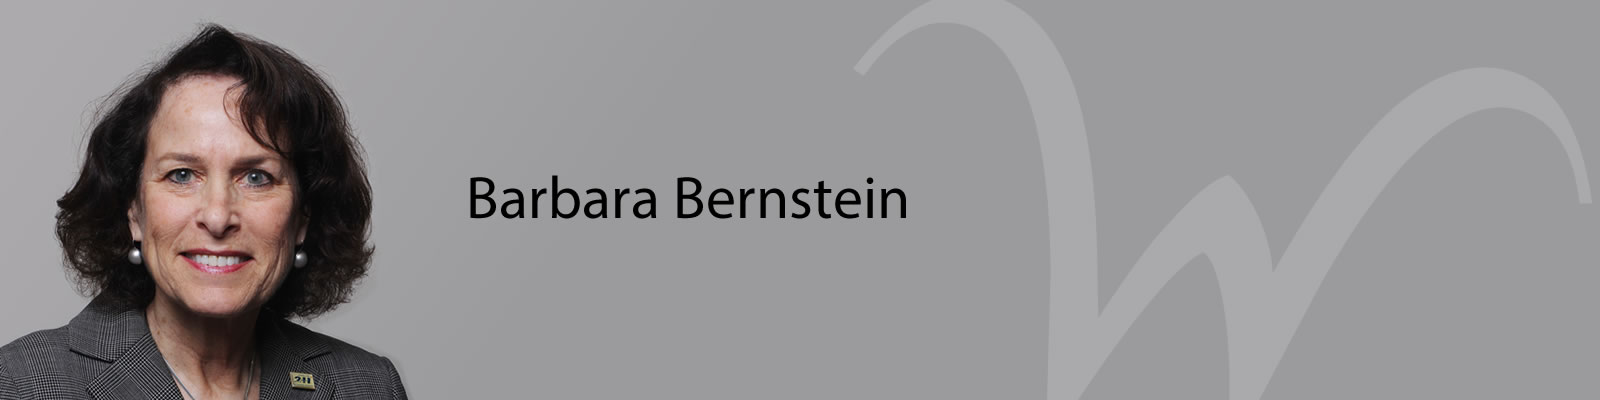 Image of Barbara Bernstein